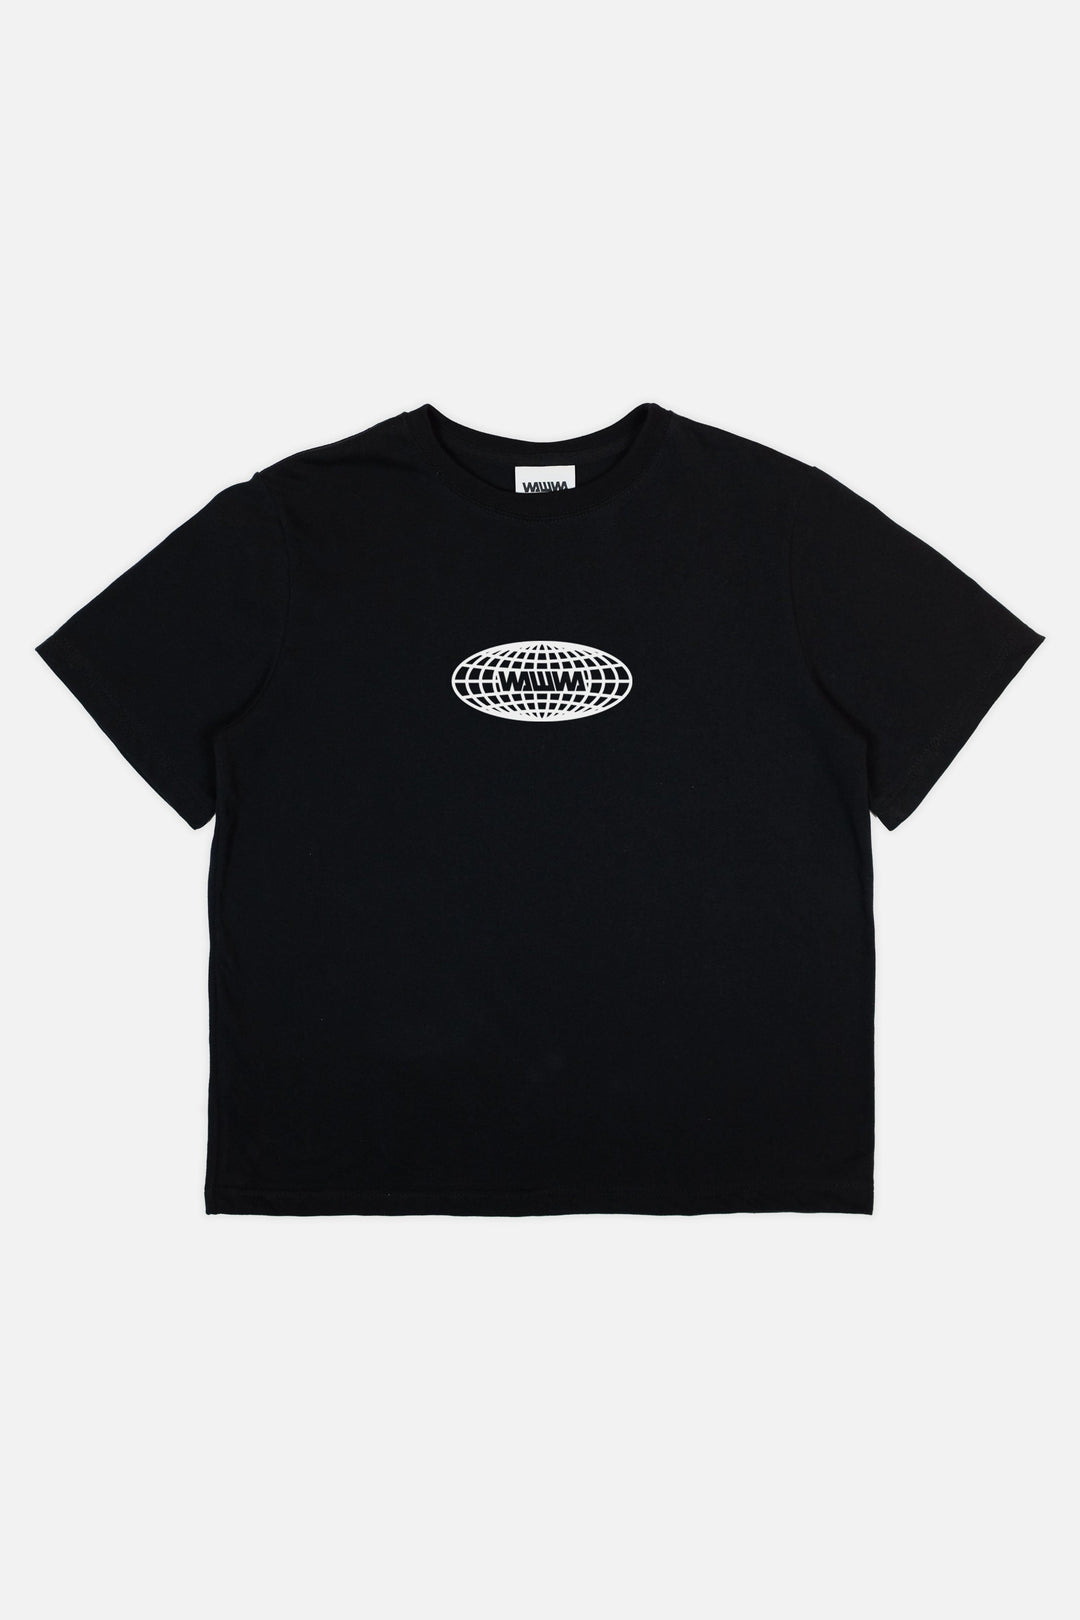 Global T-Shirt